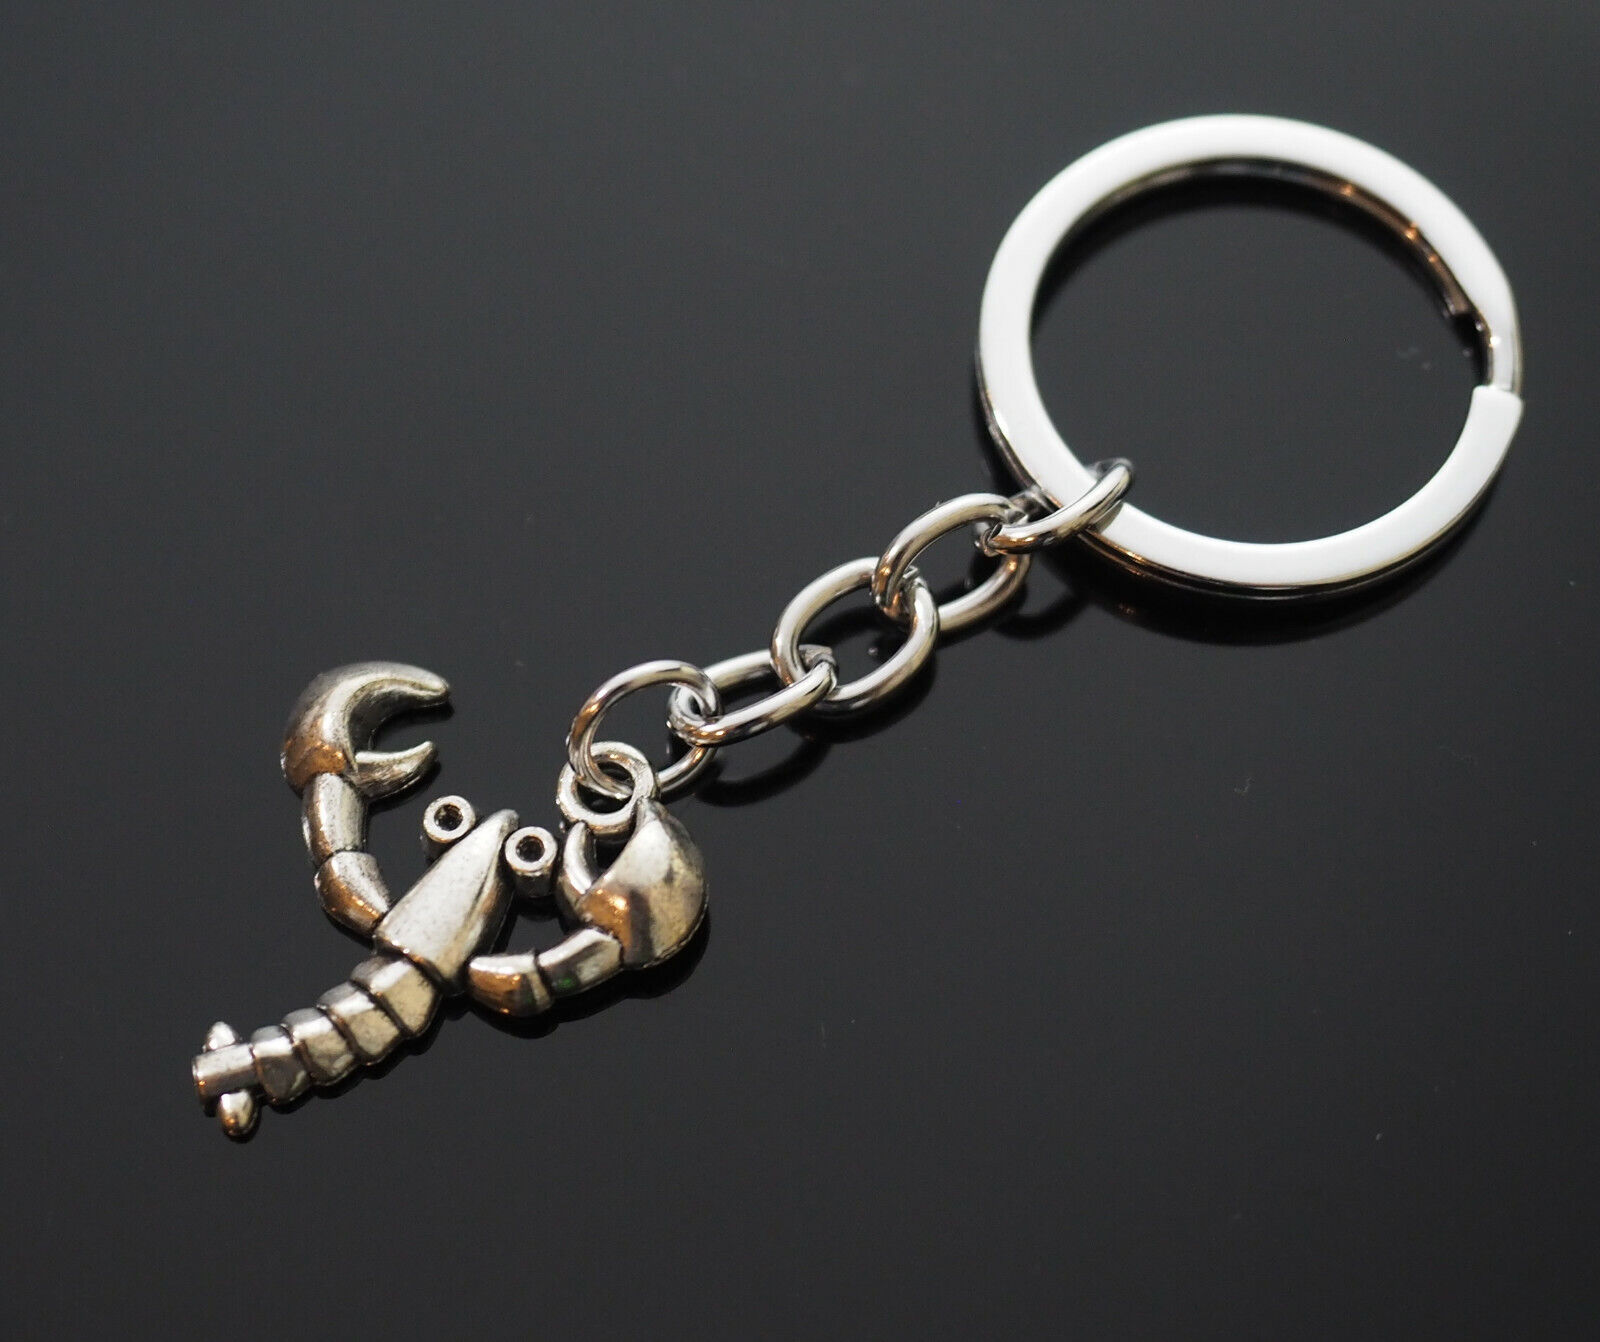 Lobster Crustacean Fishing Sea Ocean Crawfish Key Chain Silver Keychain Toy Gift